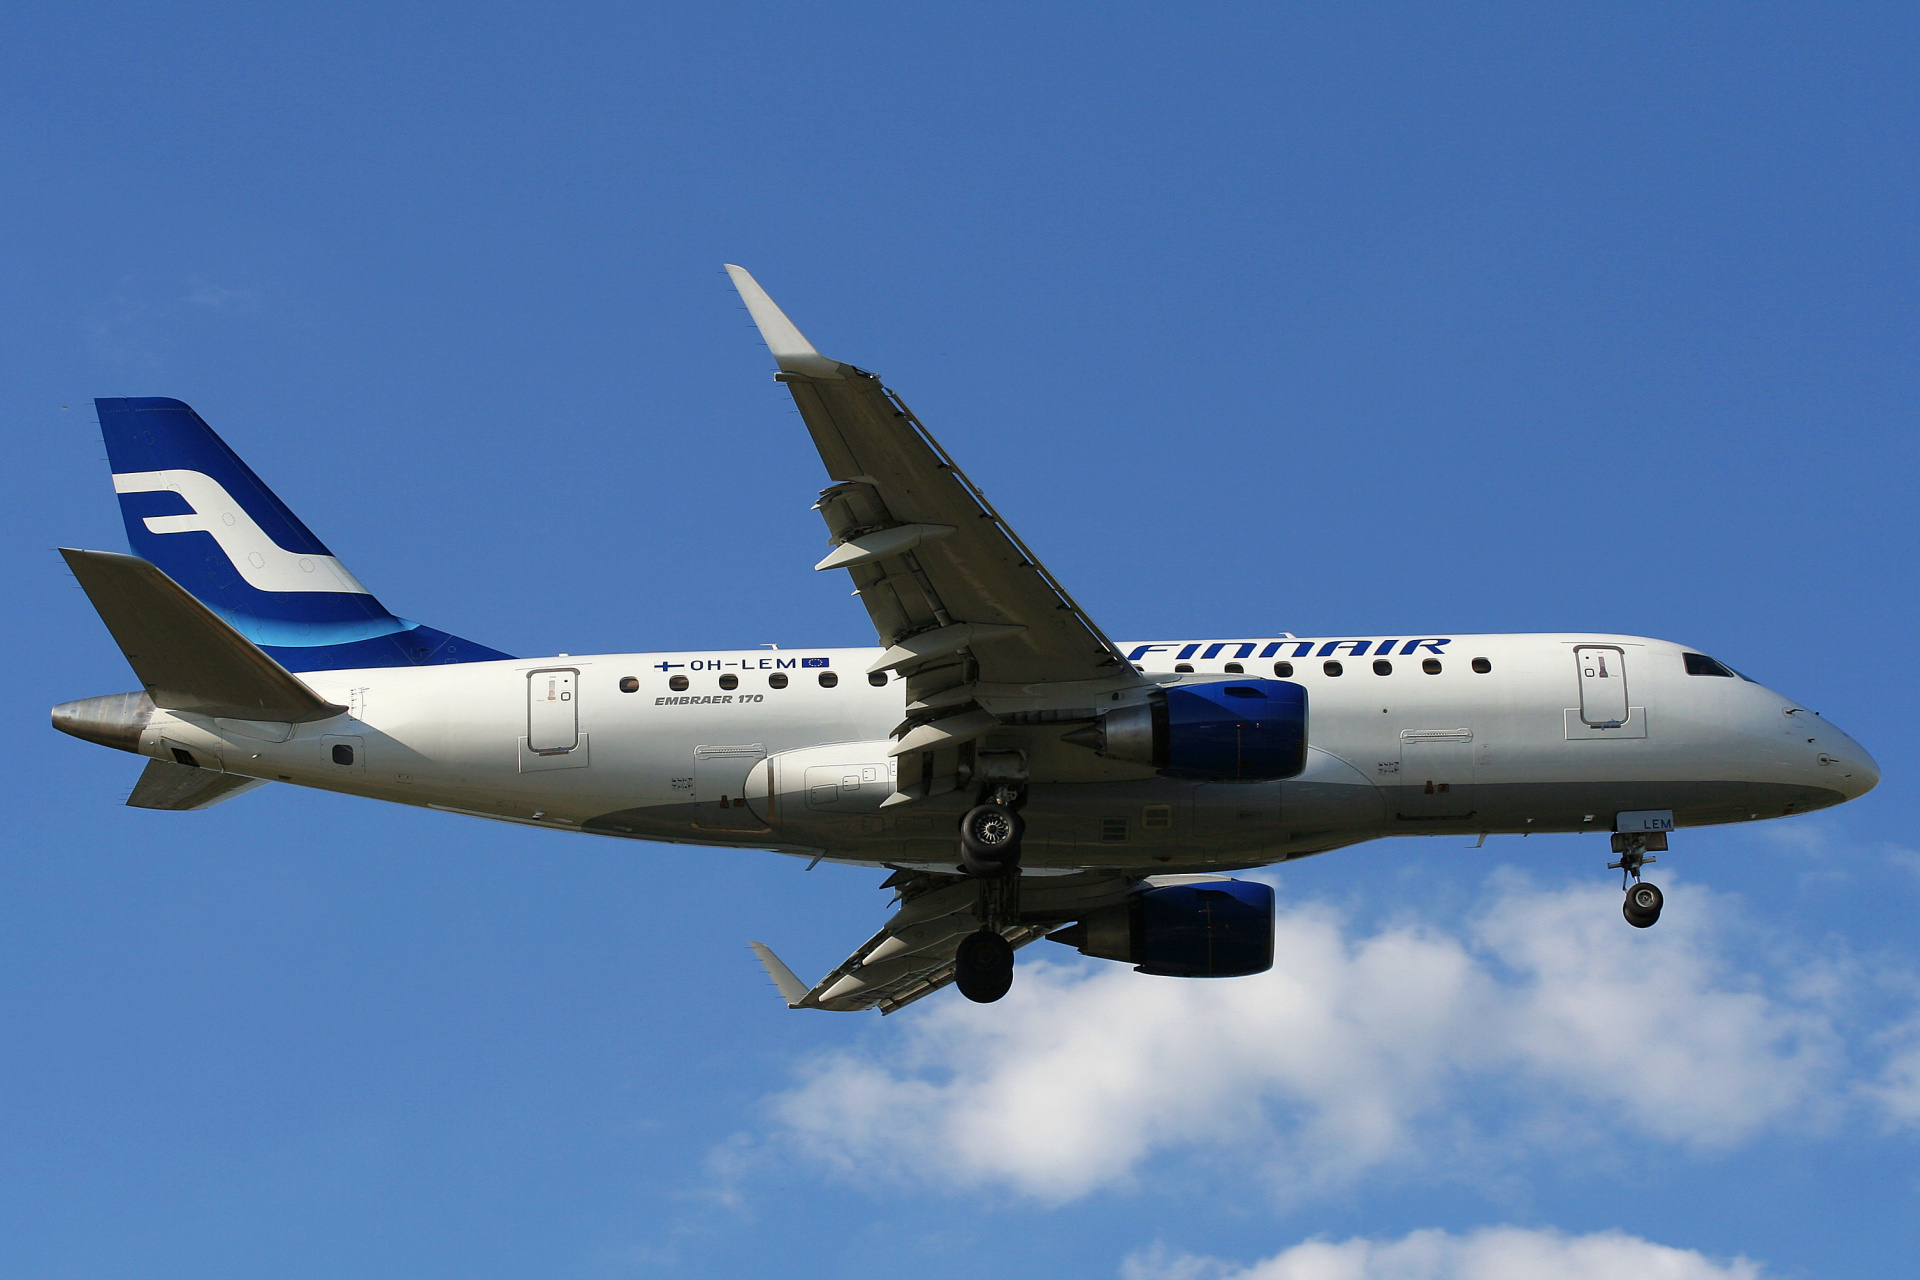 OH-LEM (Aircraft » EPWA Spotting » Embraer E170 » Finnair)